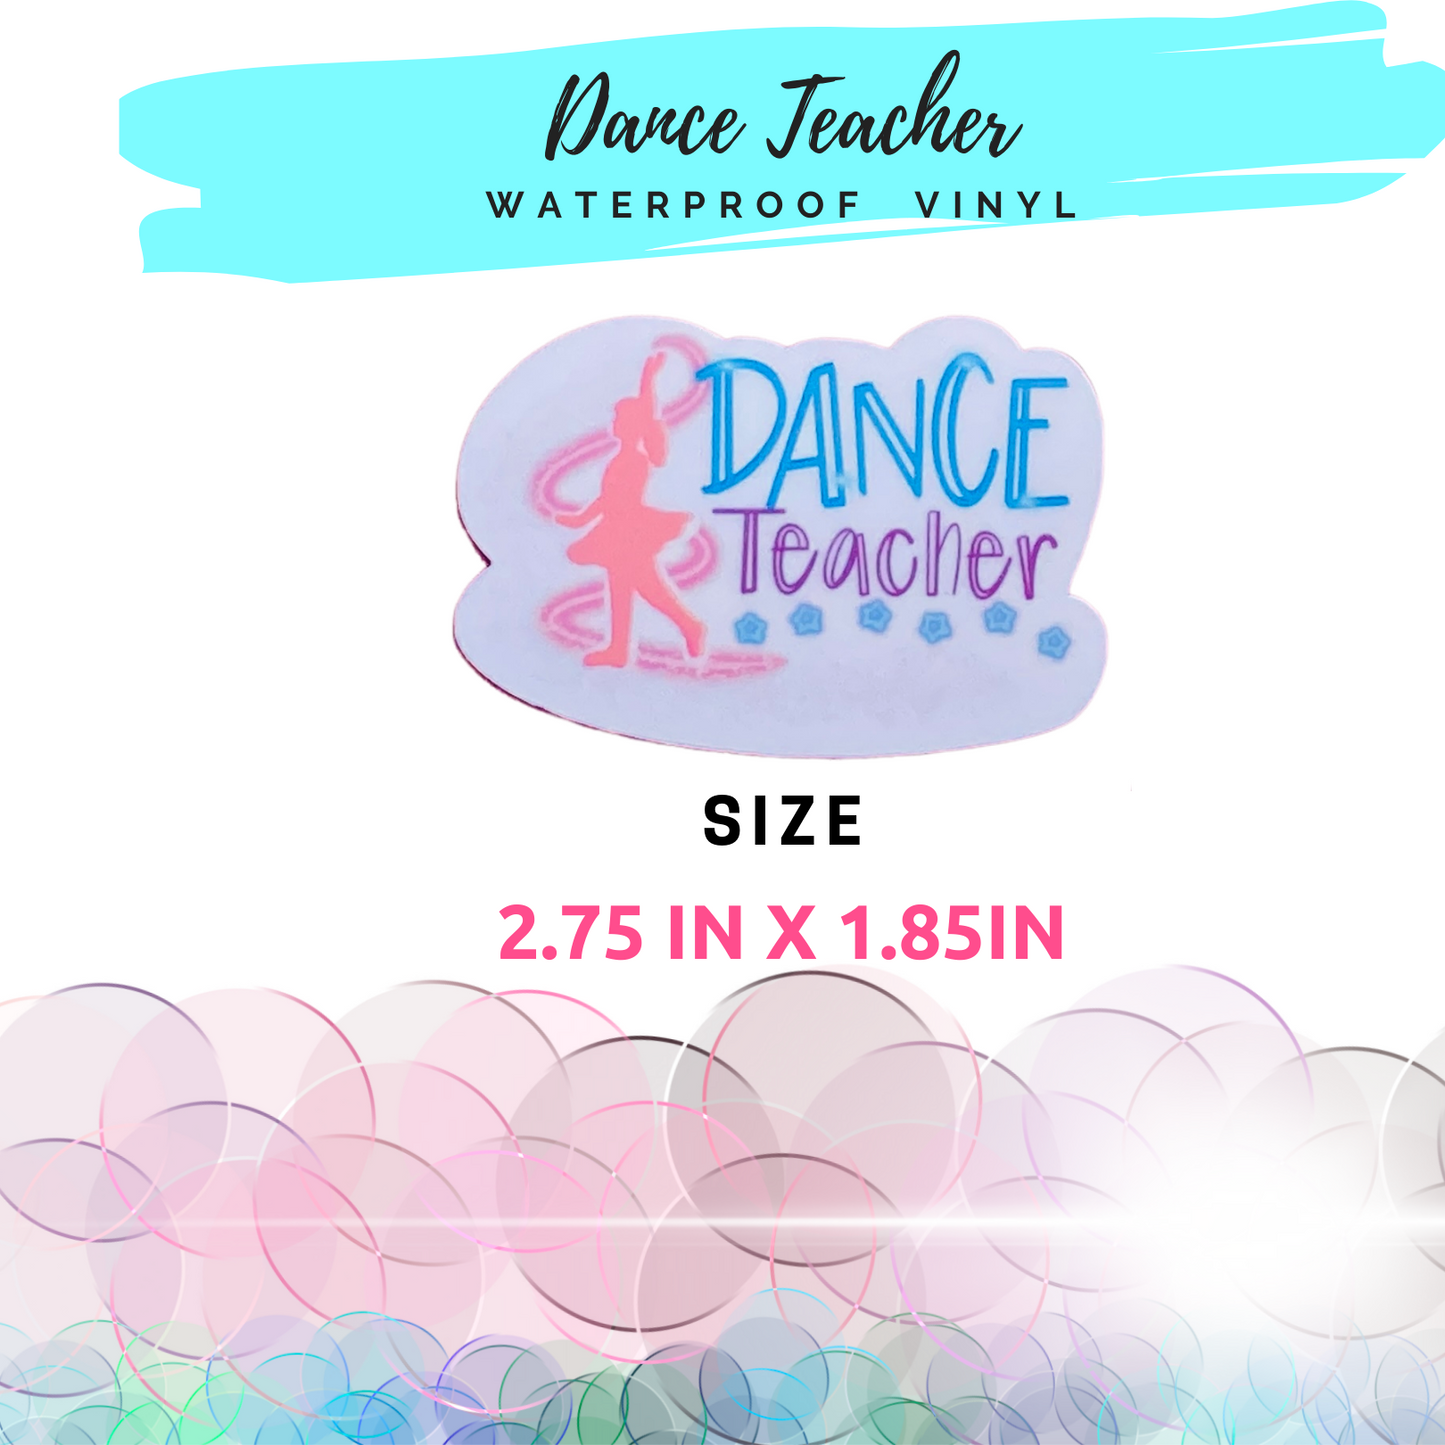 Dance Teacher Waterproof Vinyl Sticker